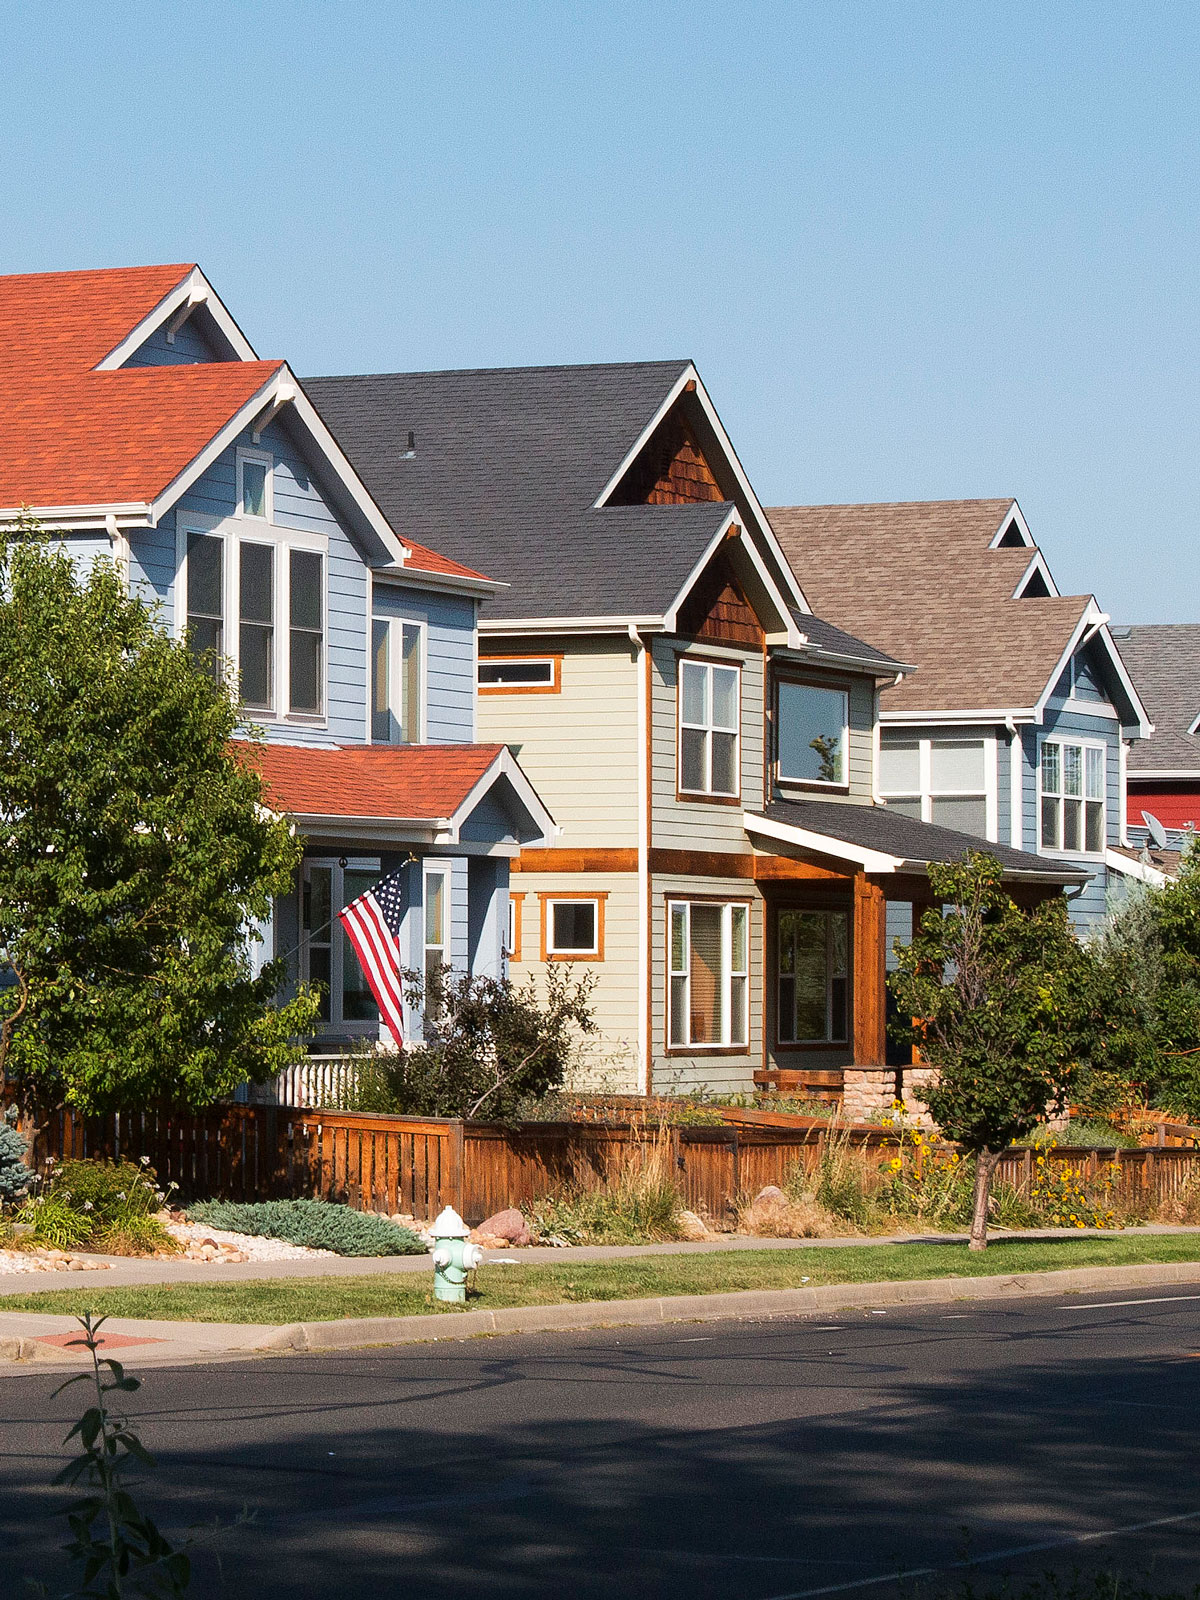 Suburban homes on a neighborhood street